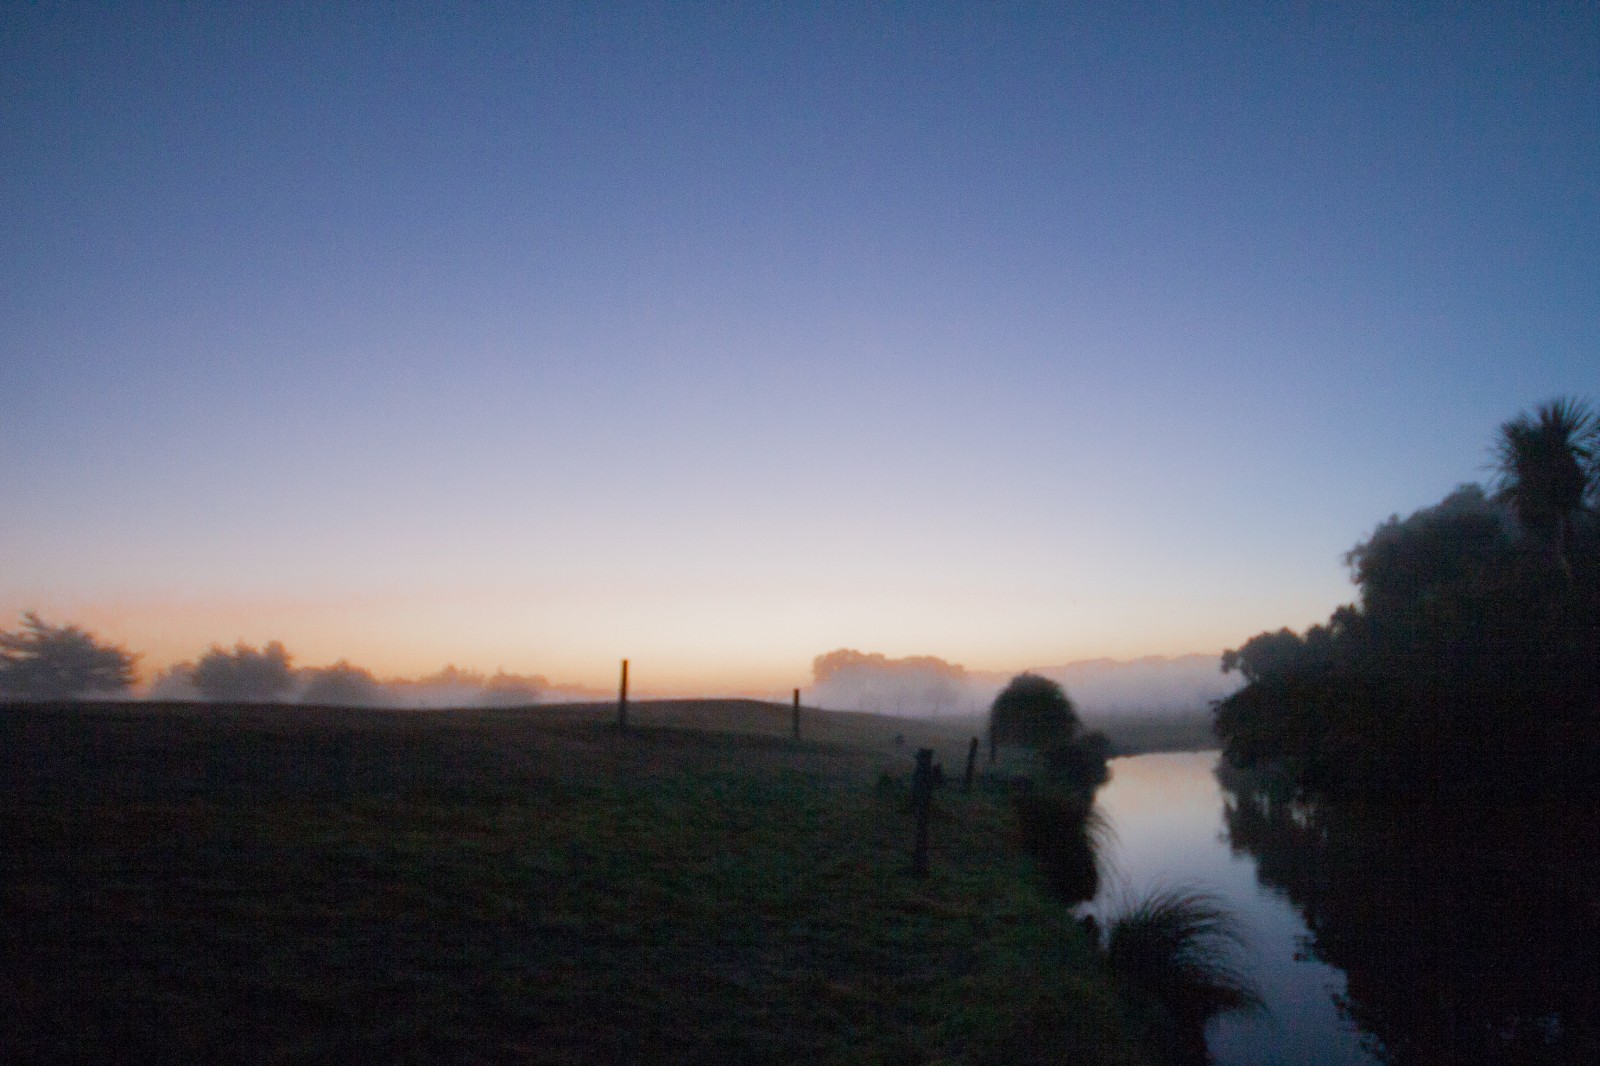 foggy morning before sunrise near river